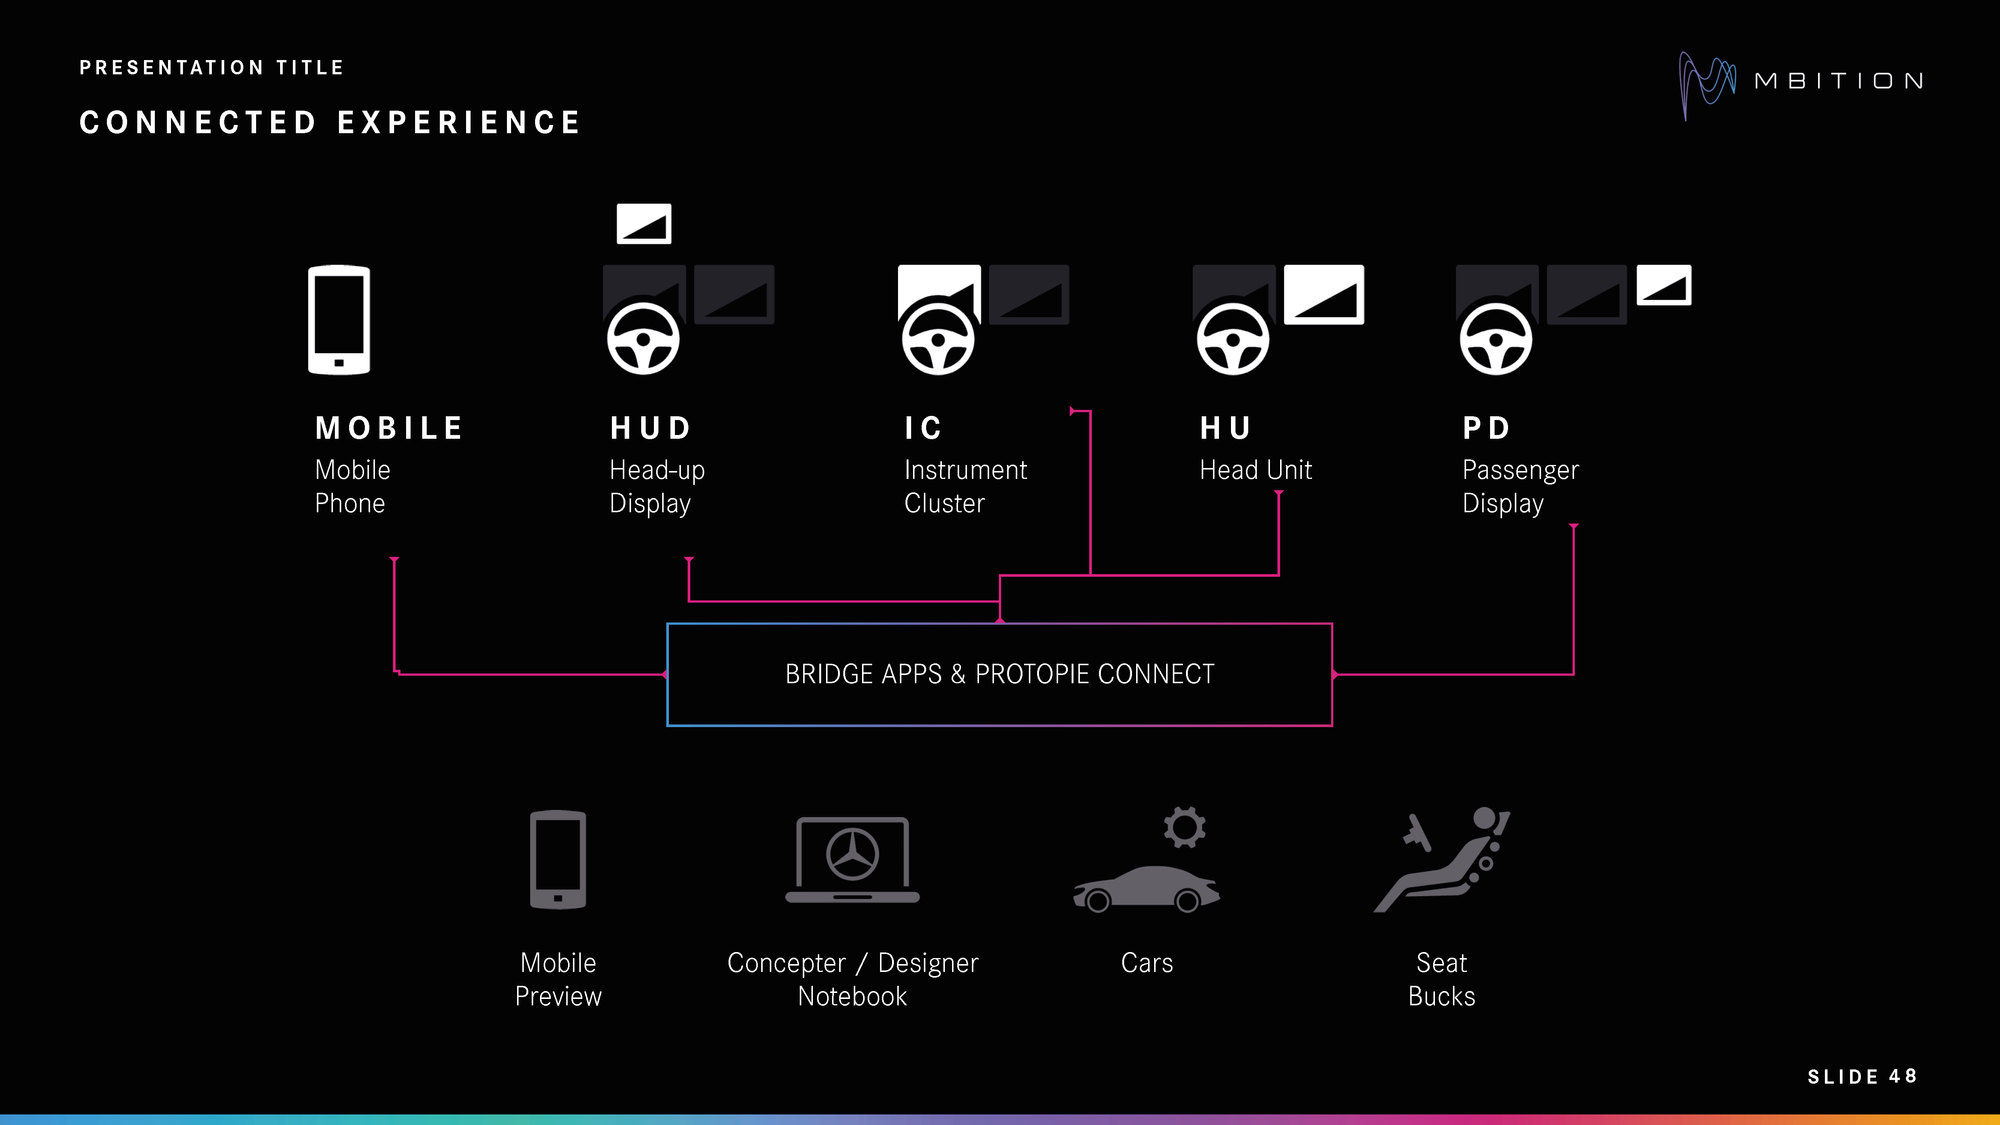 Bridge apps & ProtoPie Connect inside the Mercedes-Benz ecosystem.